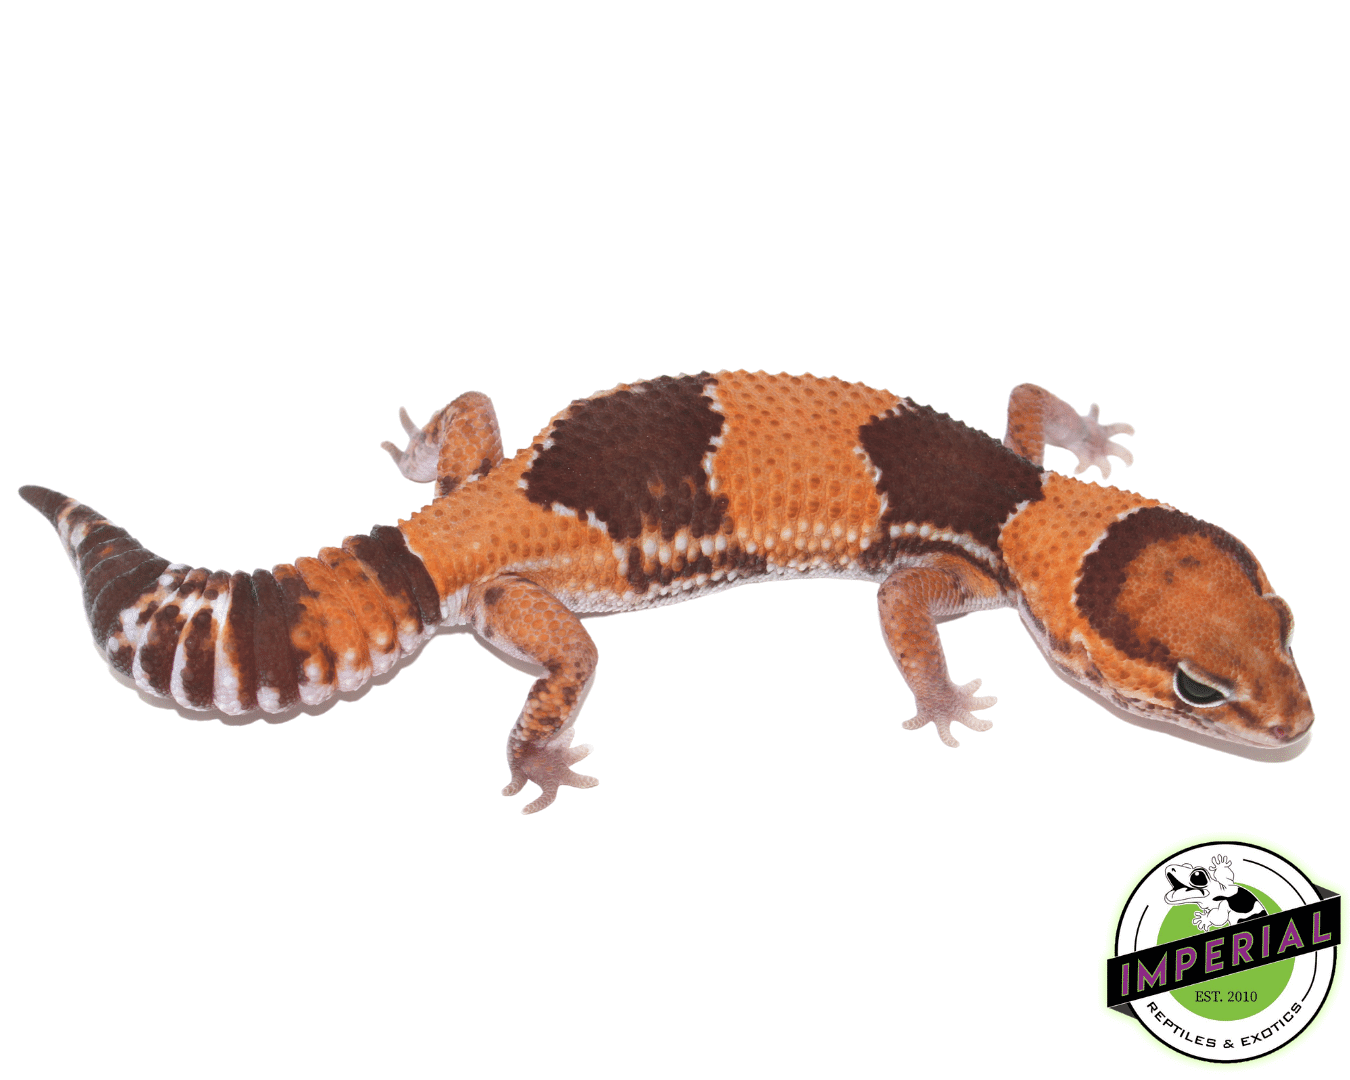 Tangerine 100% het. Amel 66% het. Patternless African Fat Tail gecko for sale, buy reptiles online